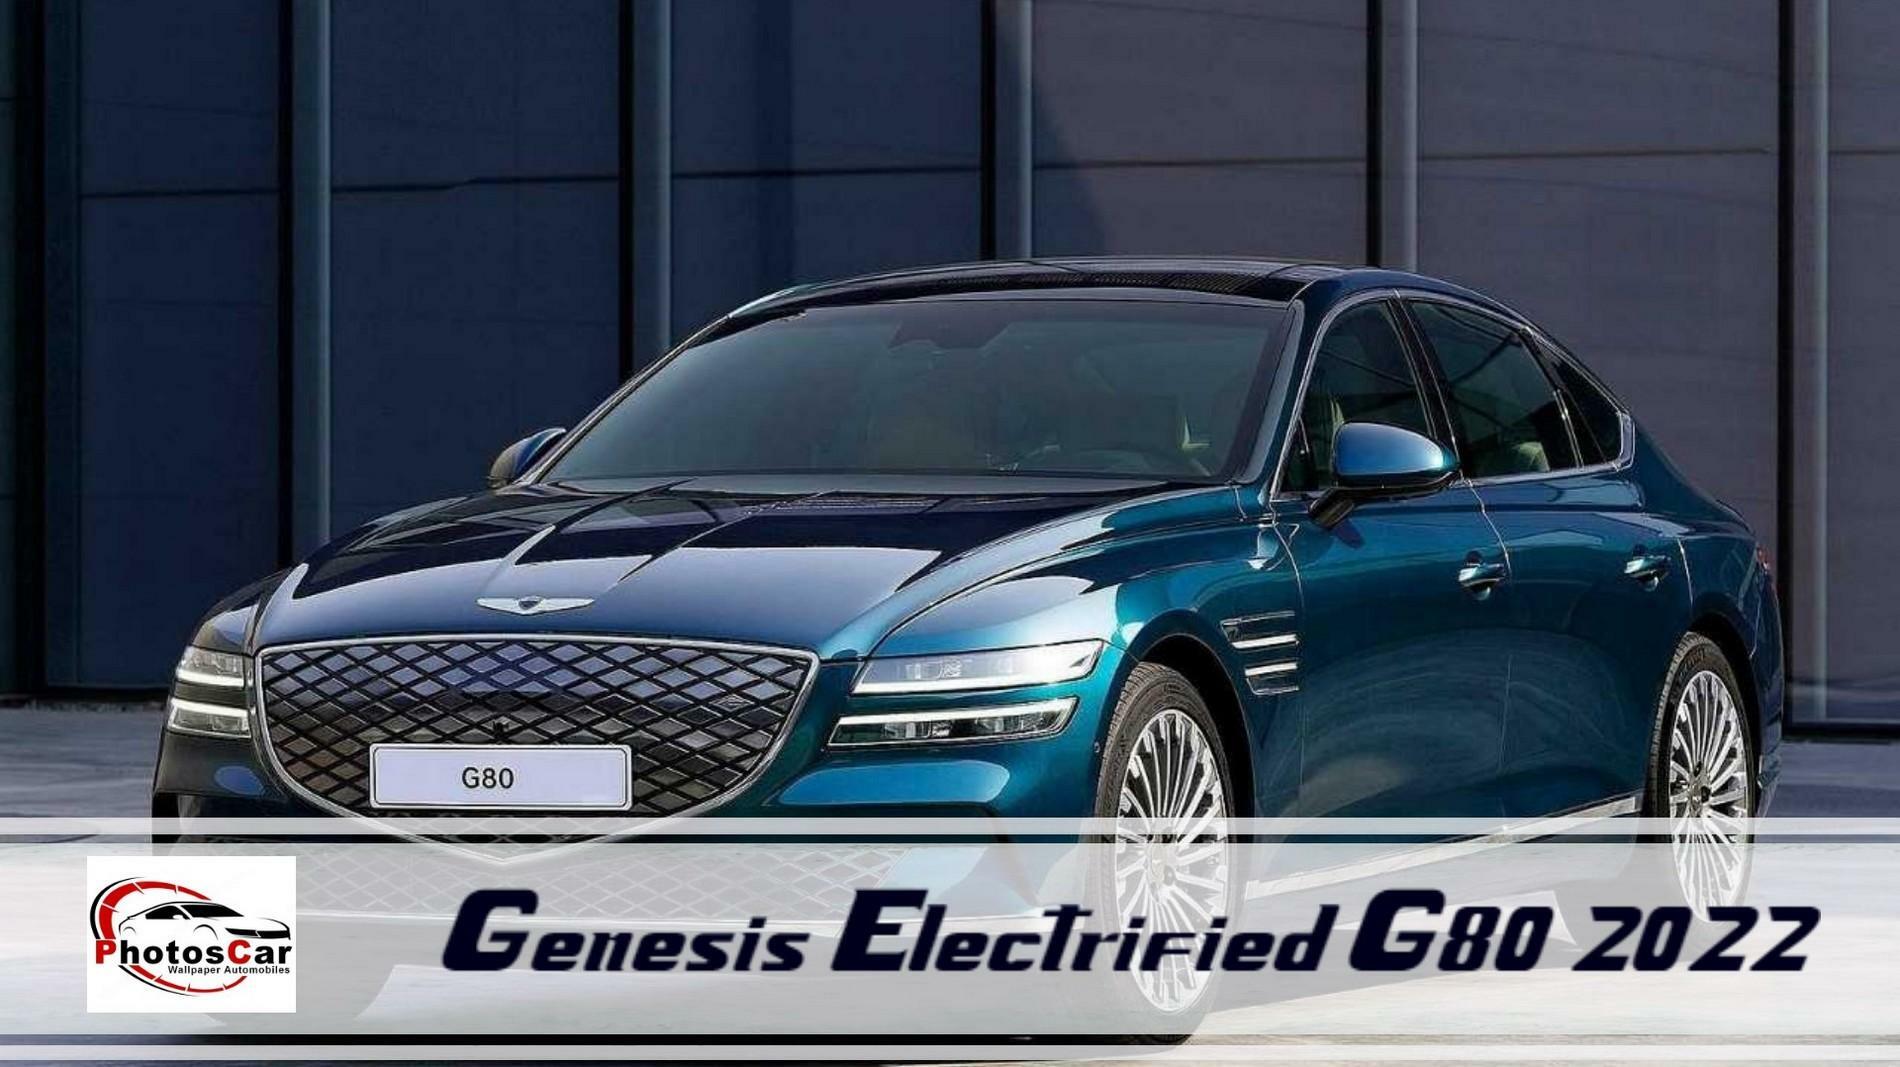 Genesis Electrified G80 2022